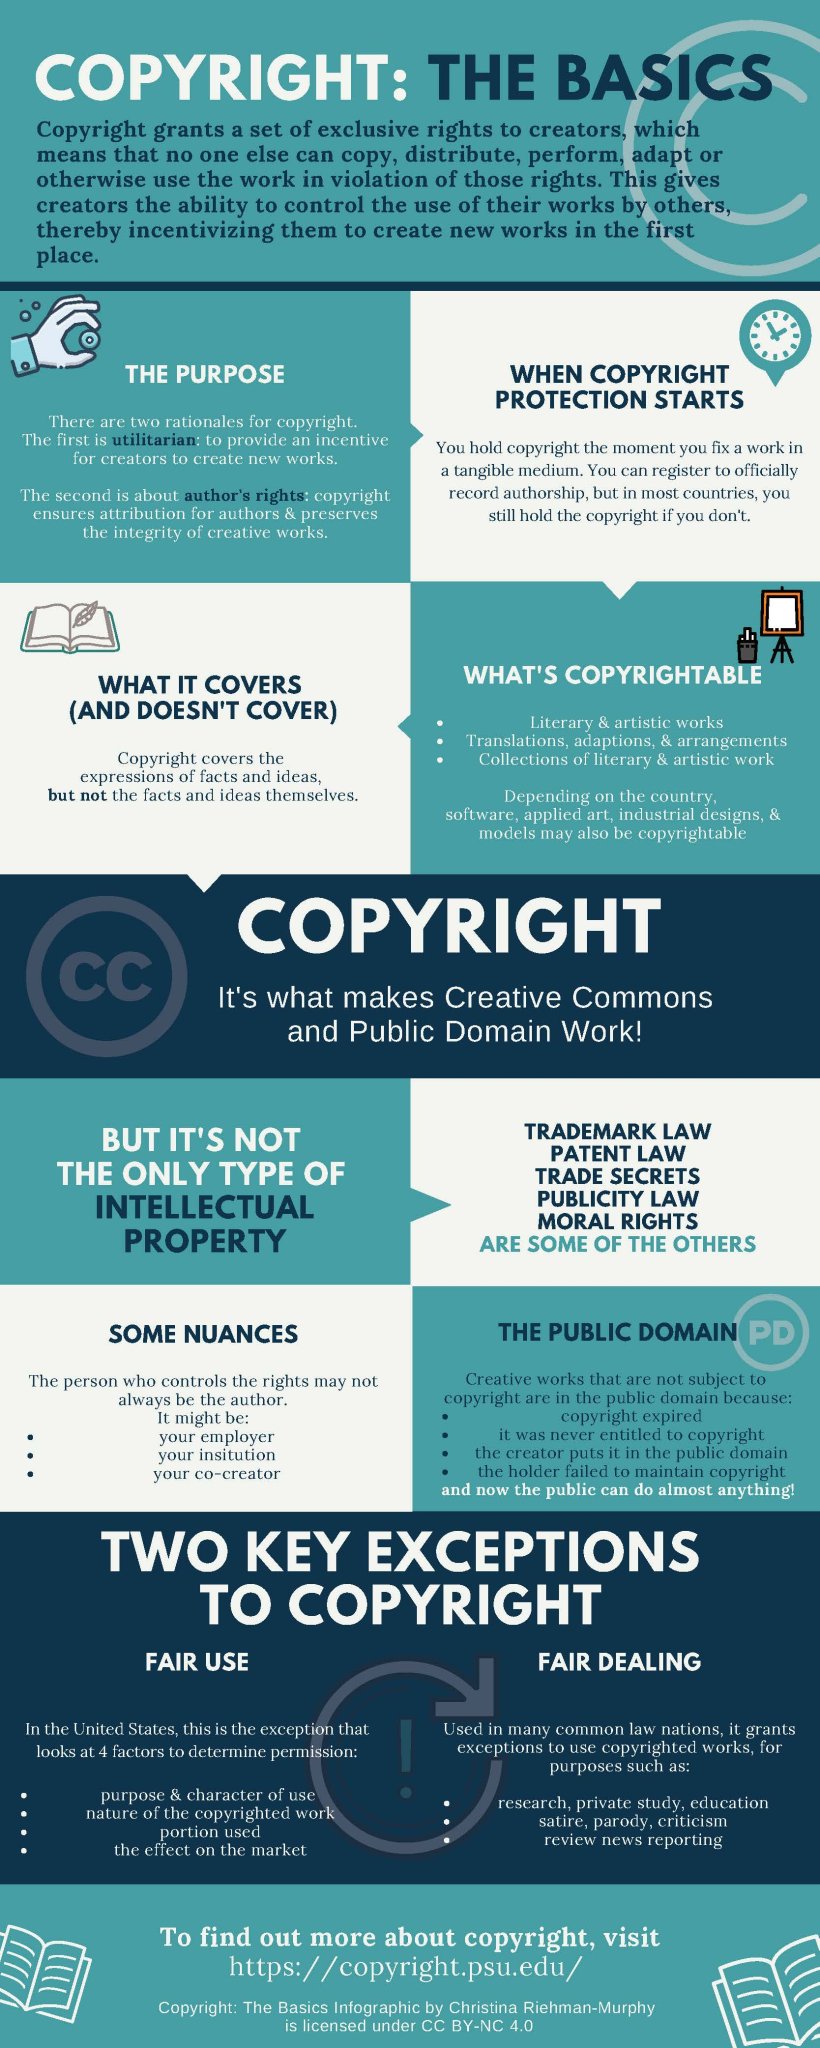 Copyright: the basics